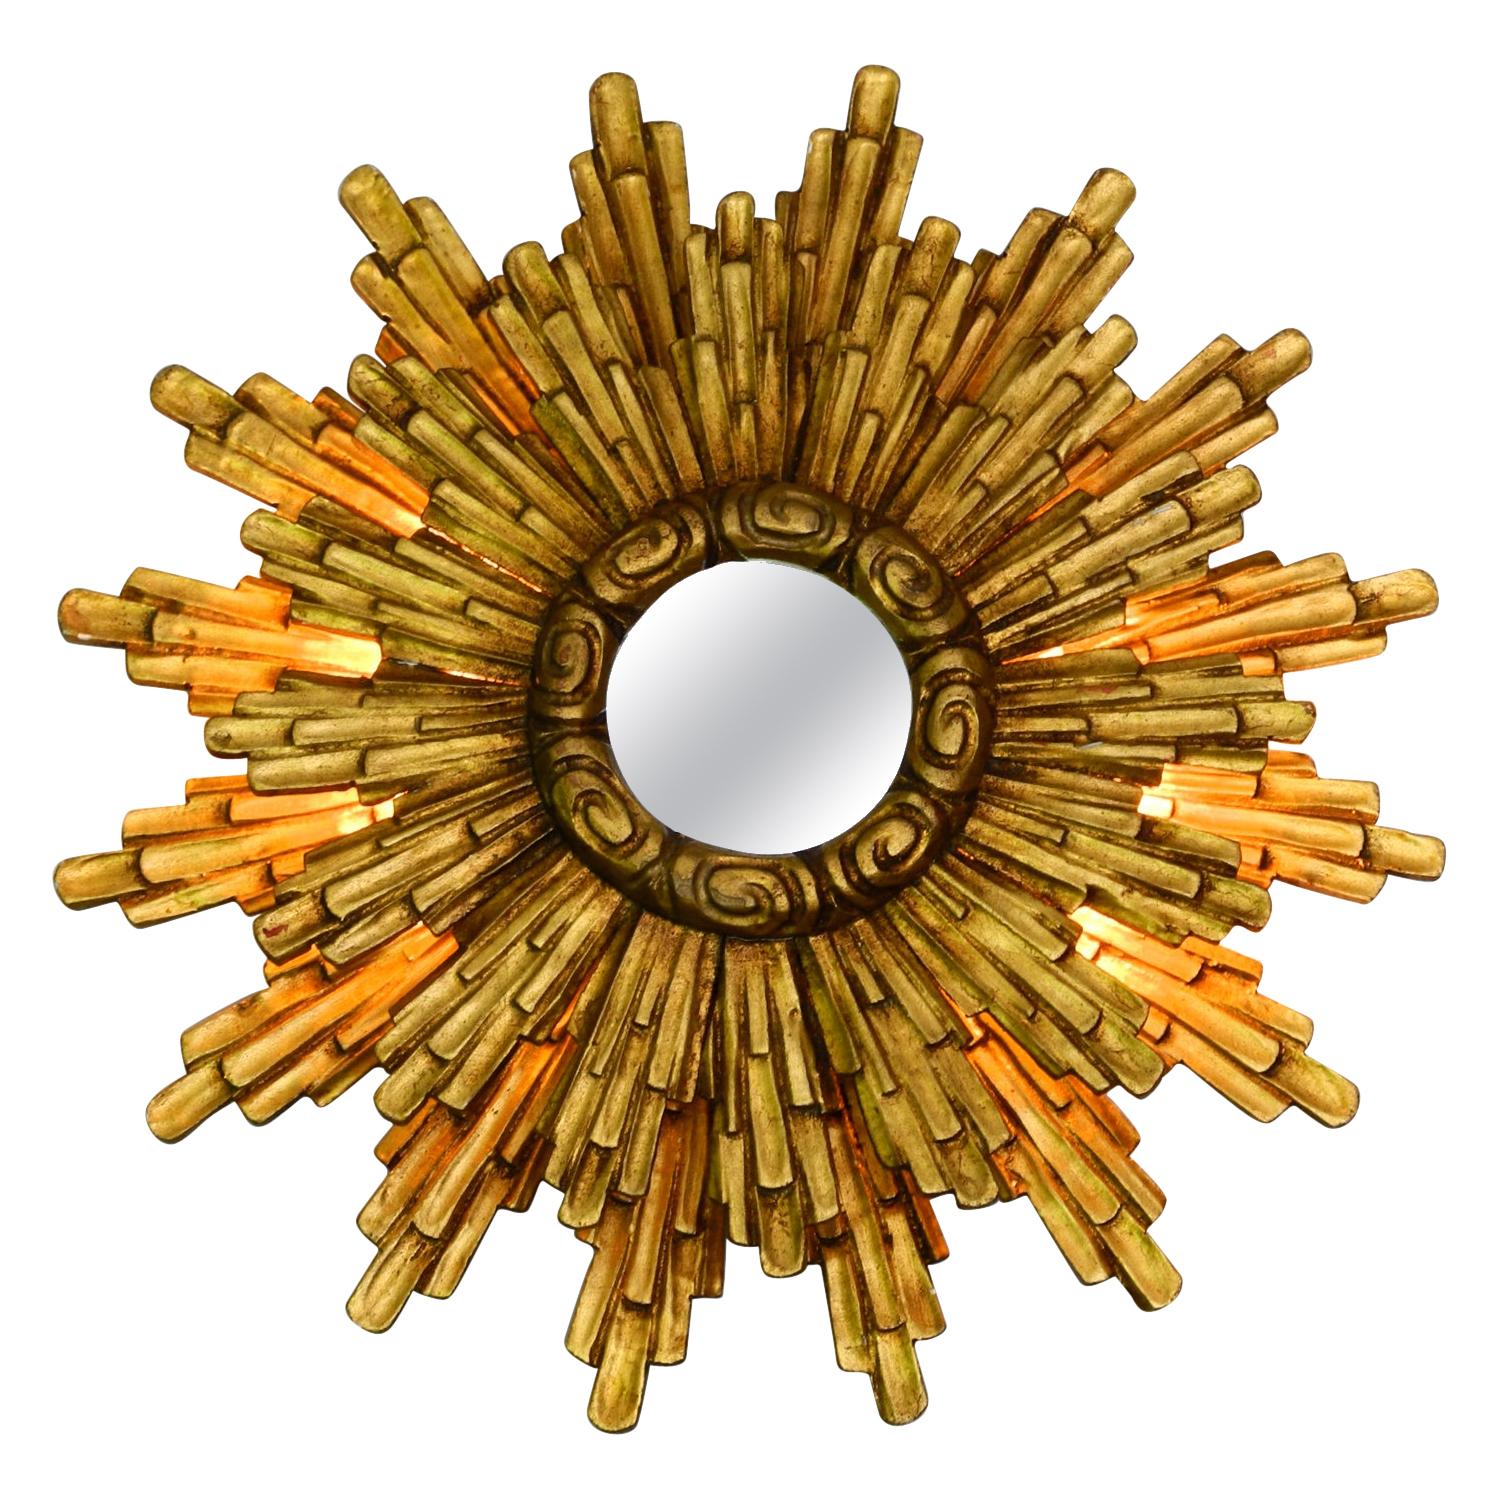 Large Illuminated Midcentury Sunburst Wall Mirror Made of Gold-Plated Wood